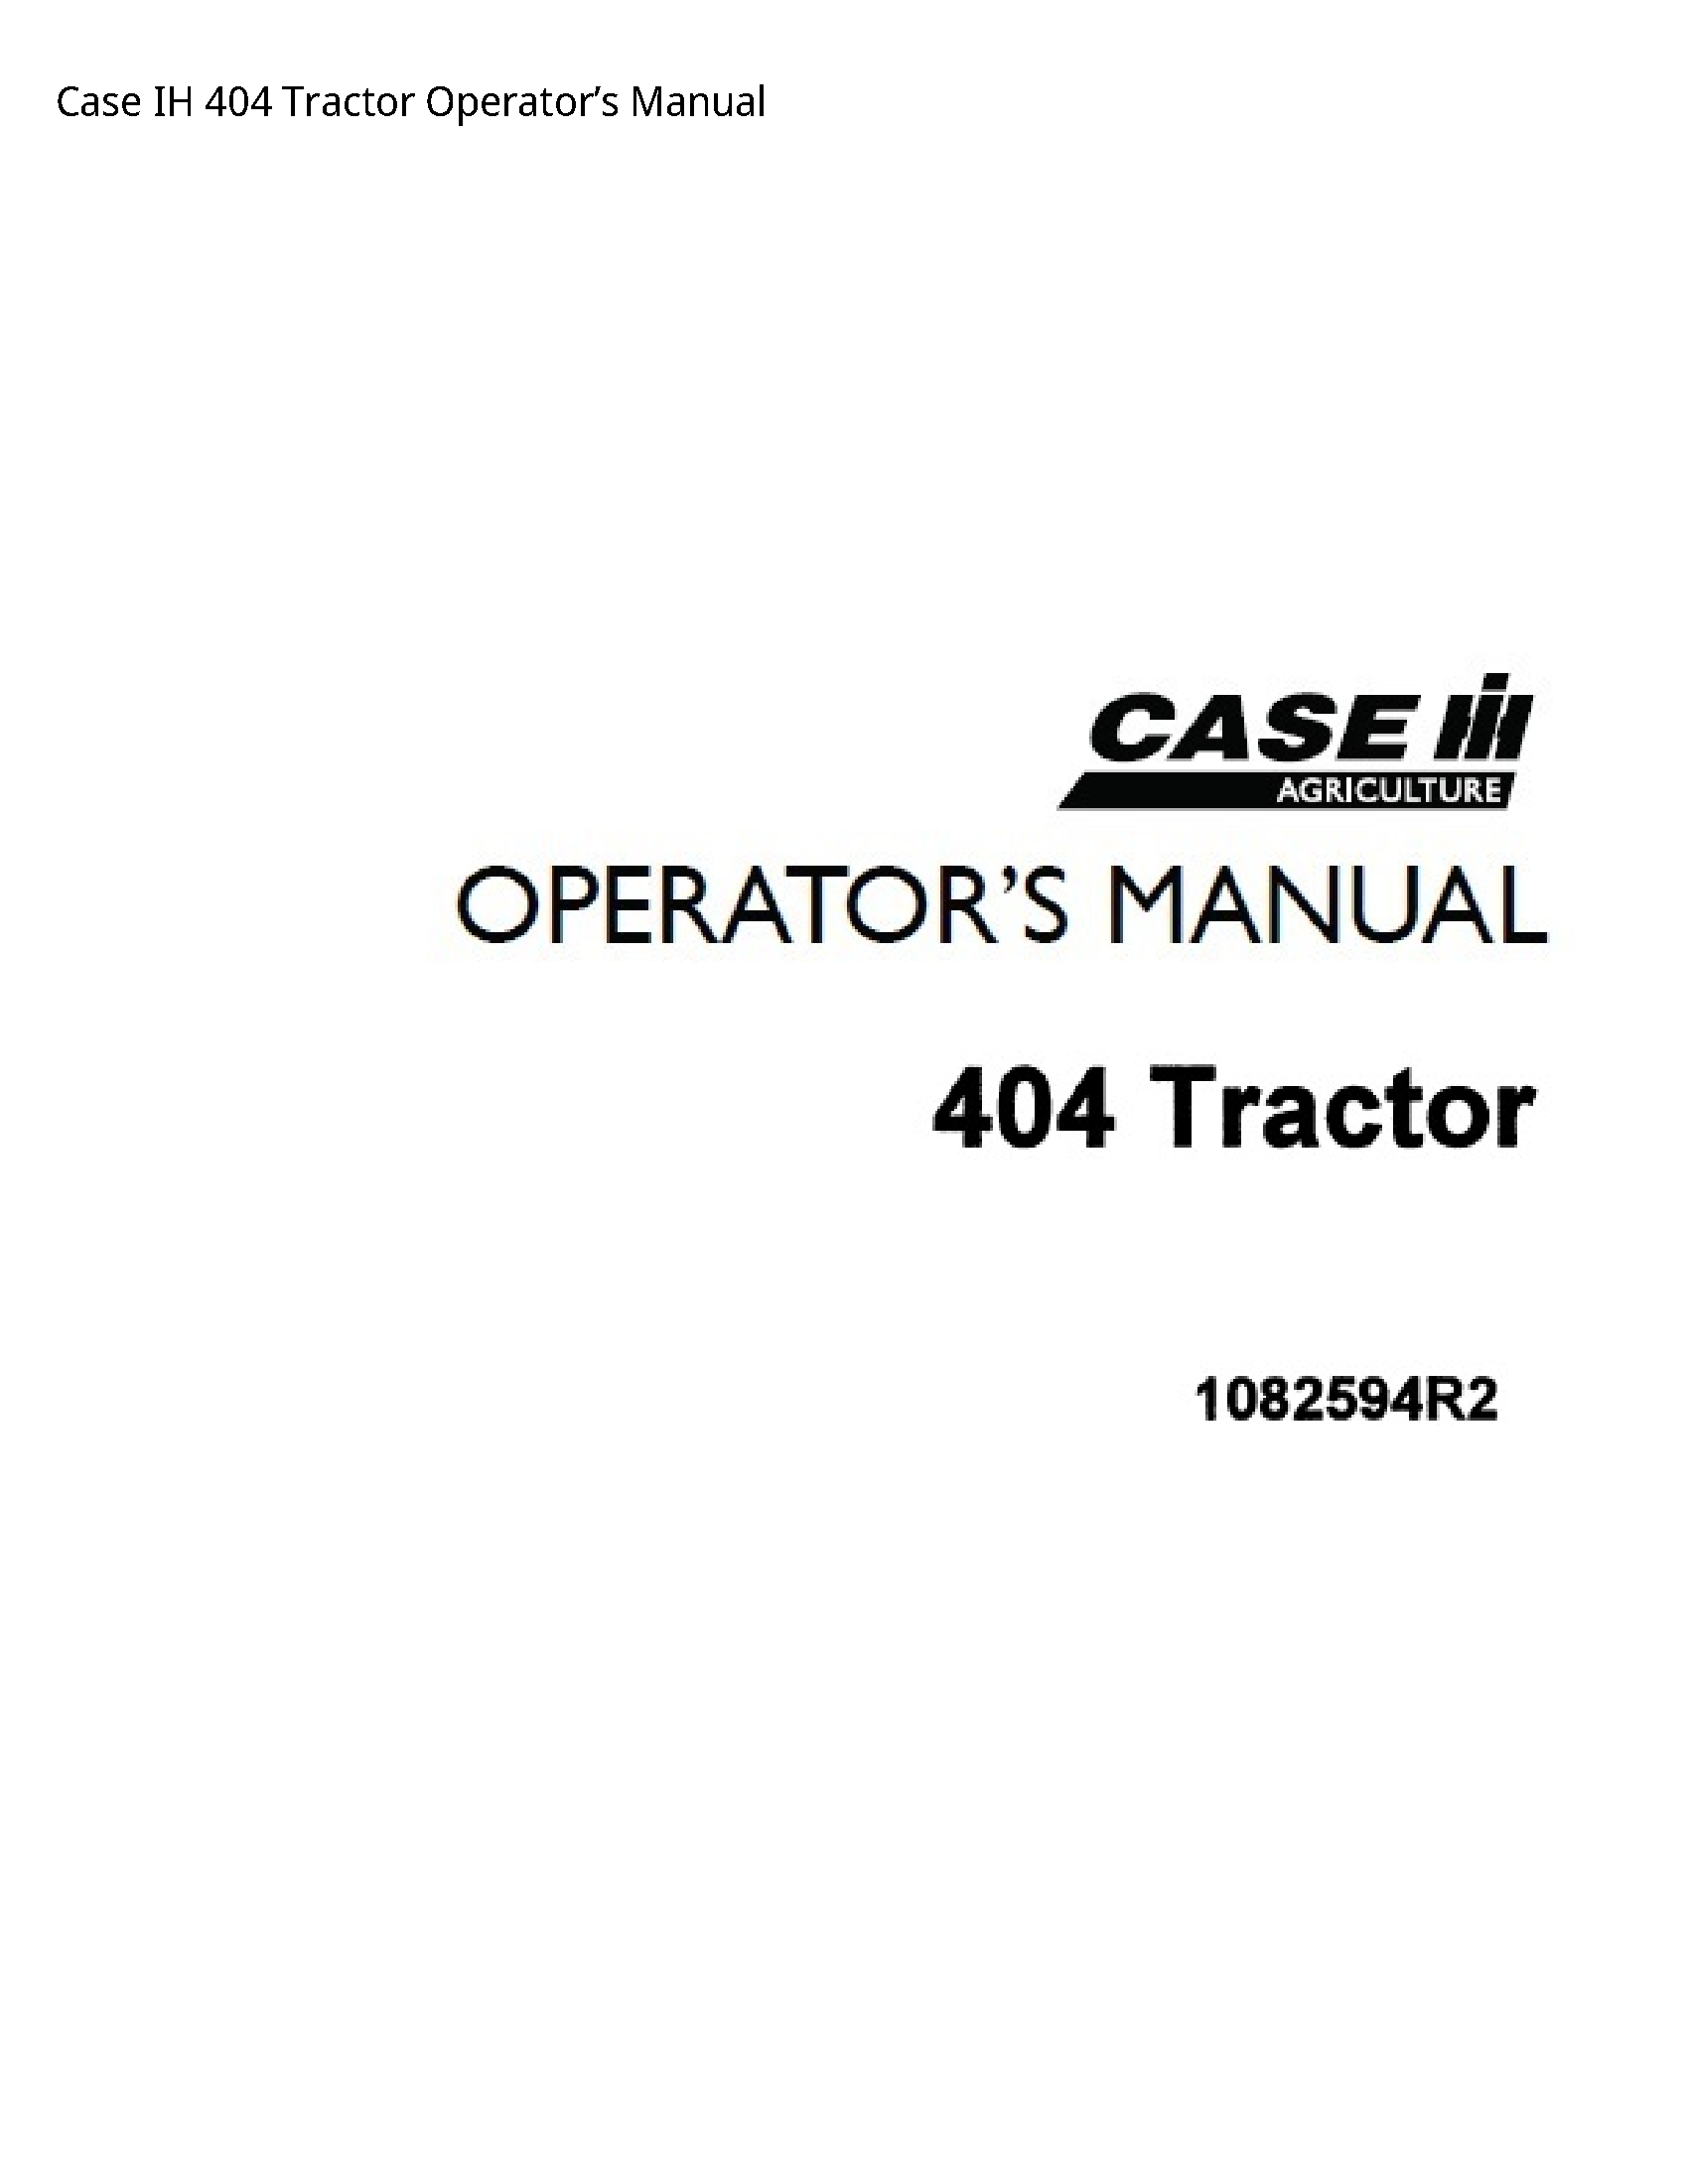 Case/Case IH 404 IH Tractor Operator’s manual